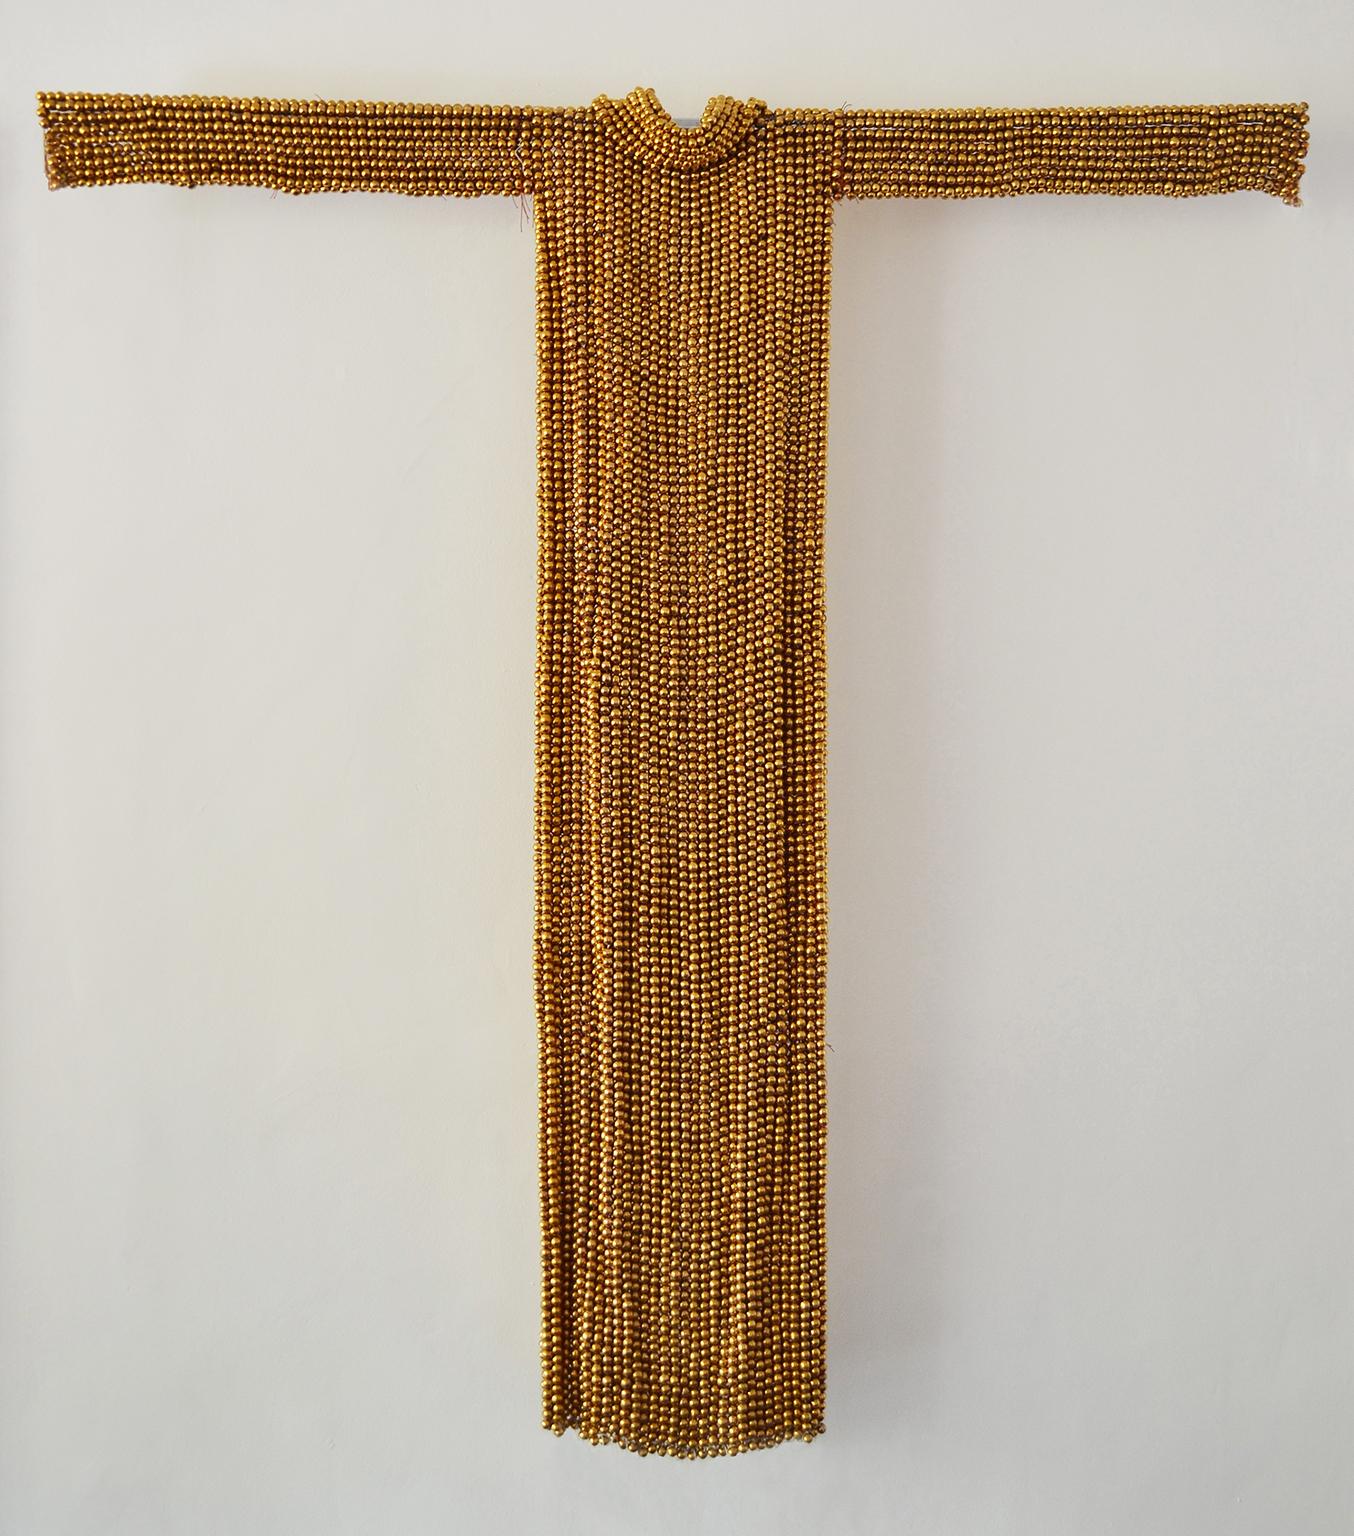 Sculpture « Vérido de Oro I ( Robe dorée) » en forme de robe à glaçure dorée en terre cuite